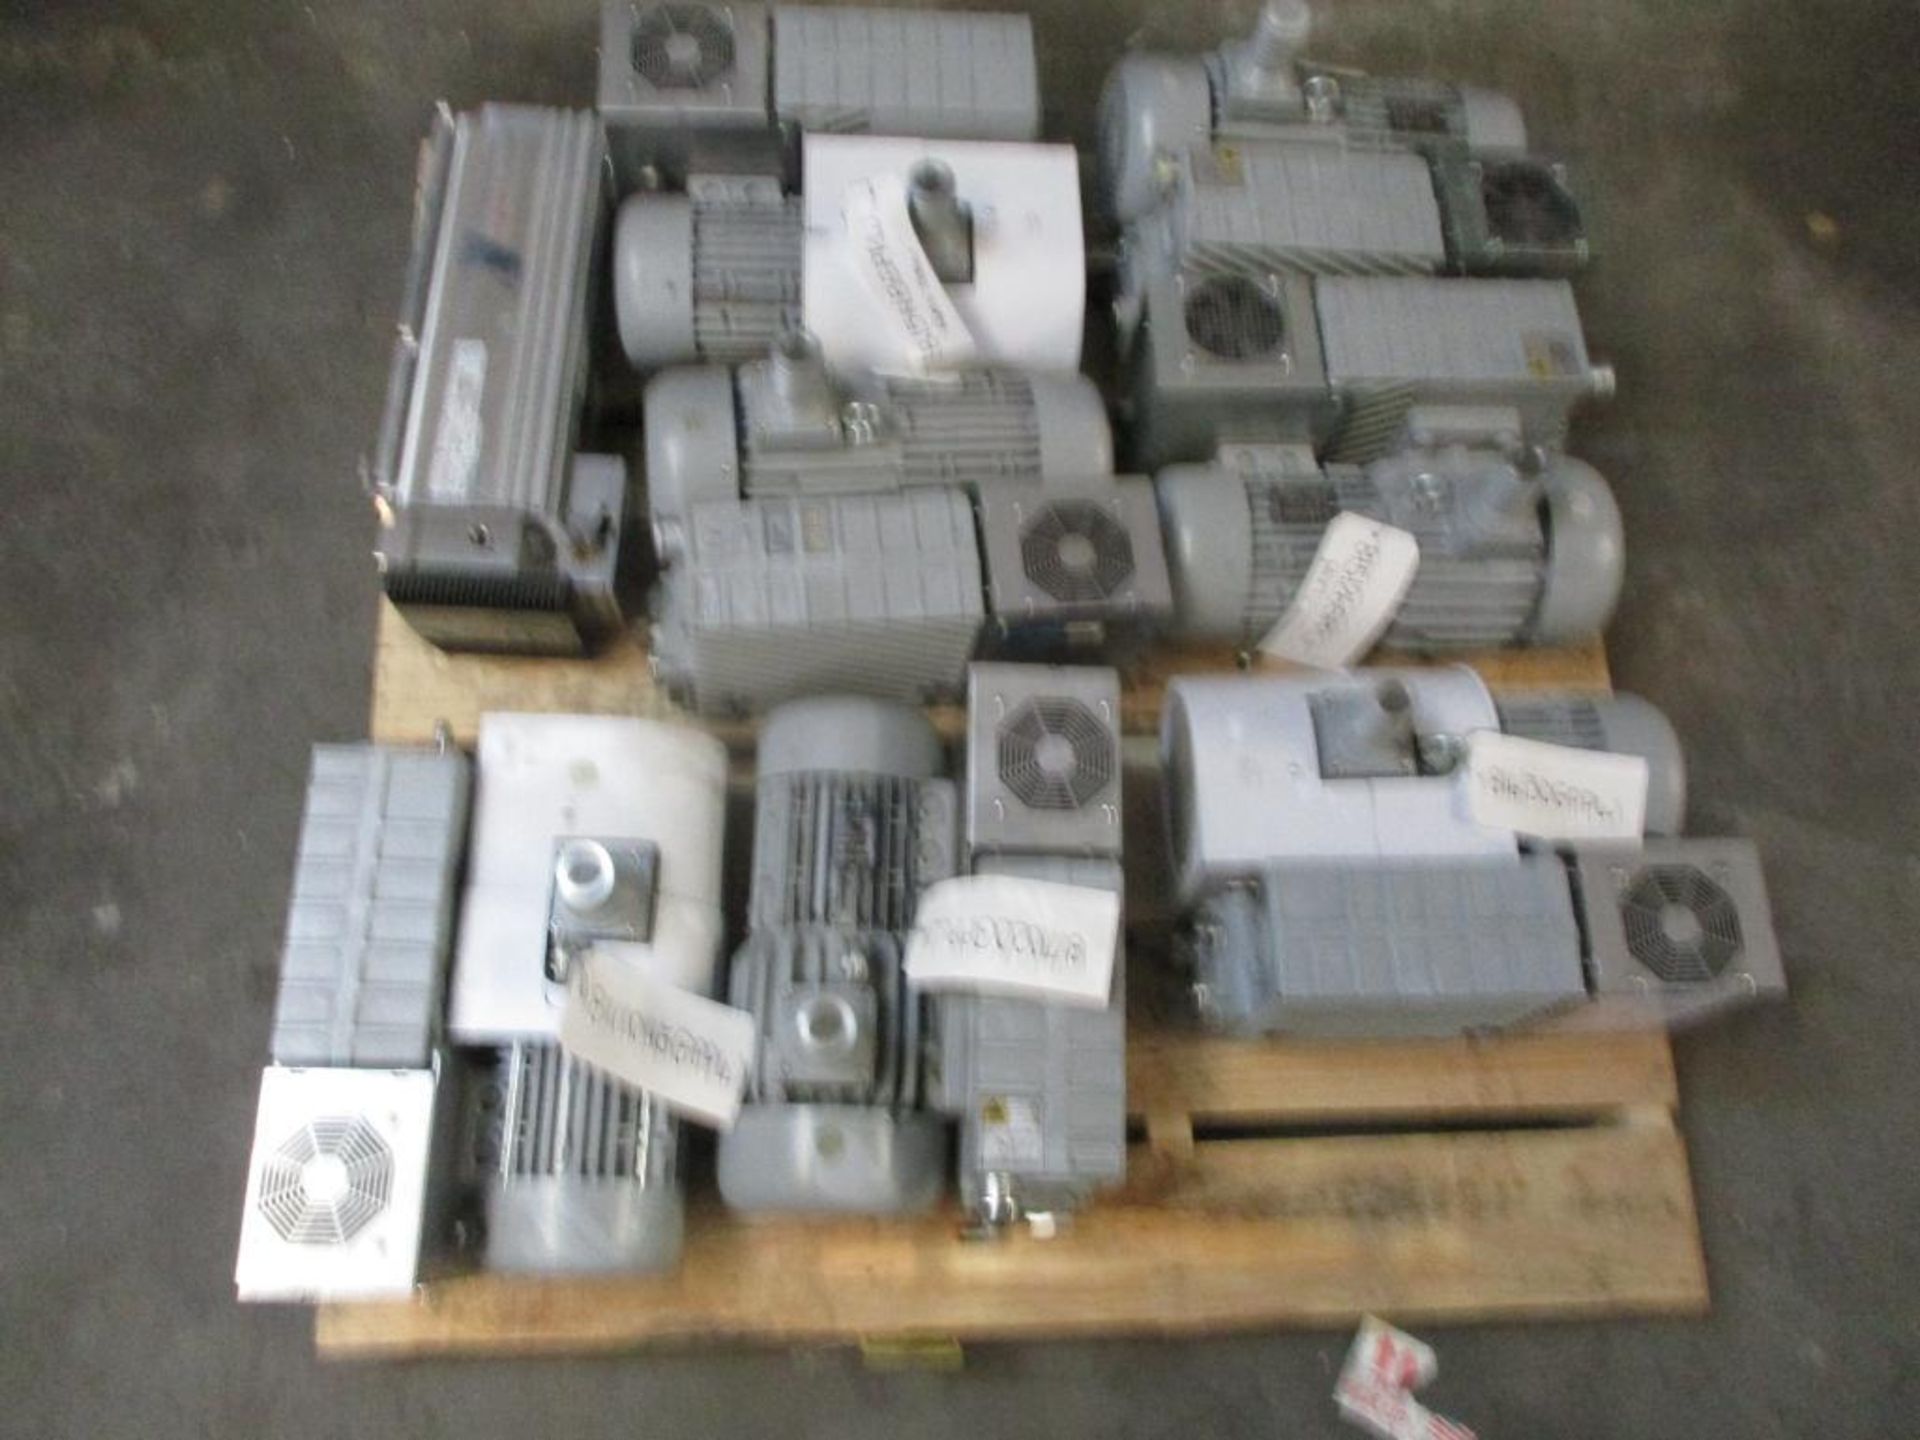 Vacuum Pumps, Agilent MS40-S, MS40+, Pfeiffer TMH 261-250-040 (8) pcs.